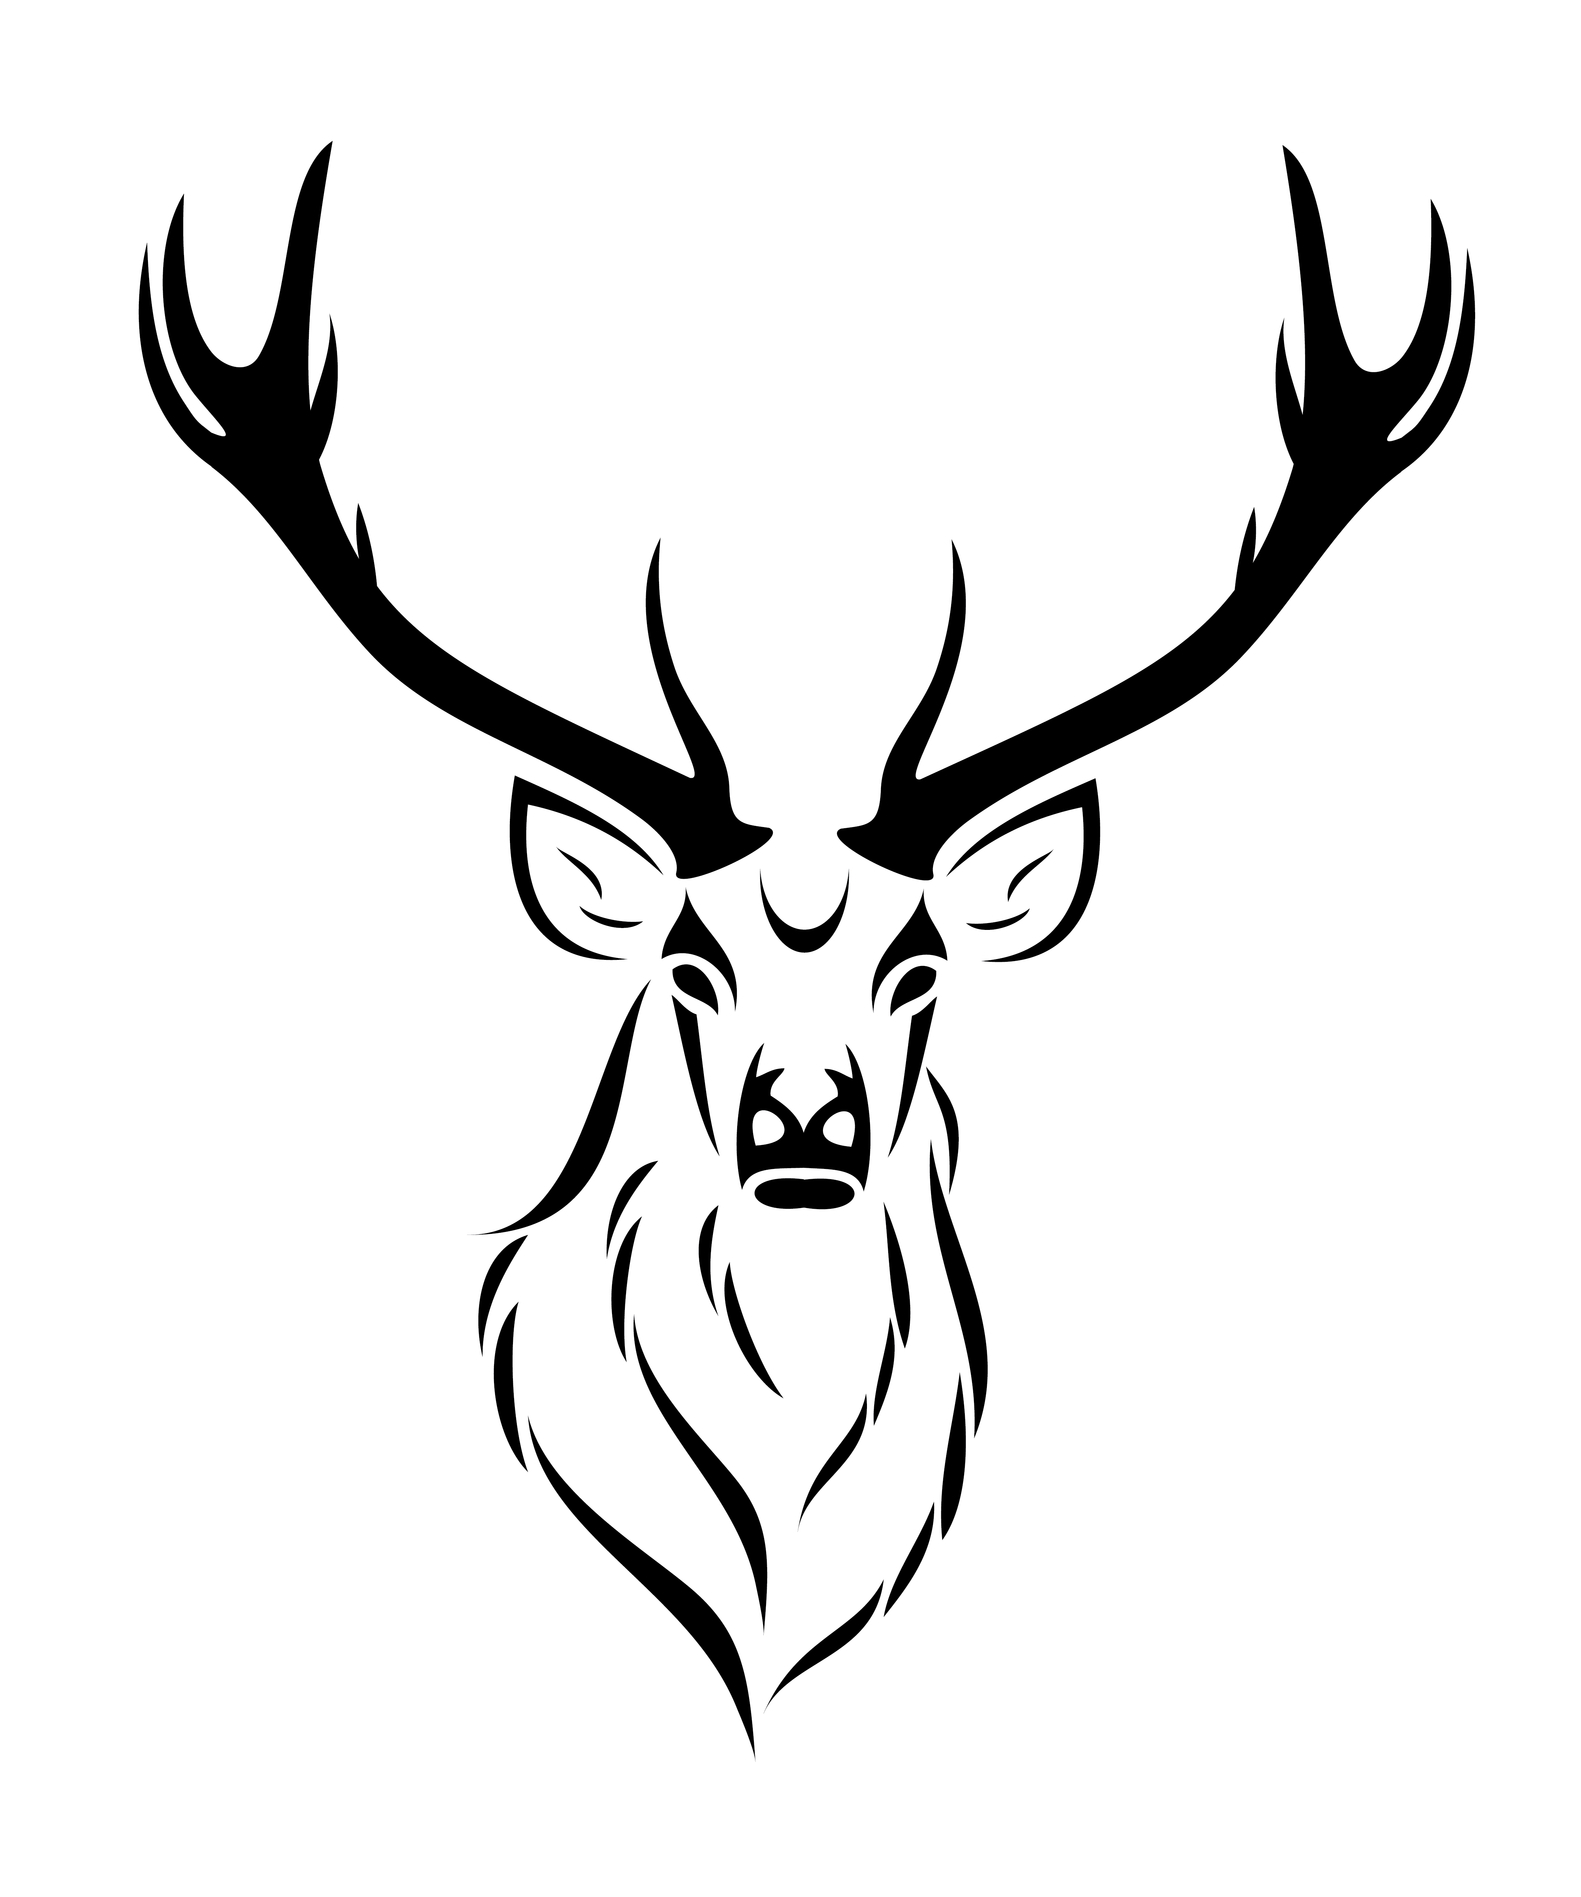 Deer Design drawing by Andrea Morales | Post 17622